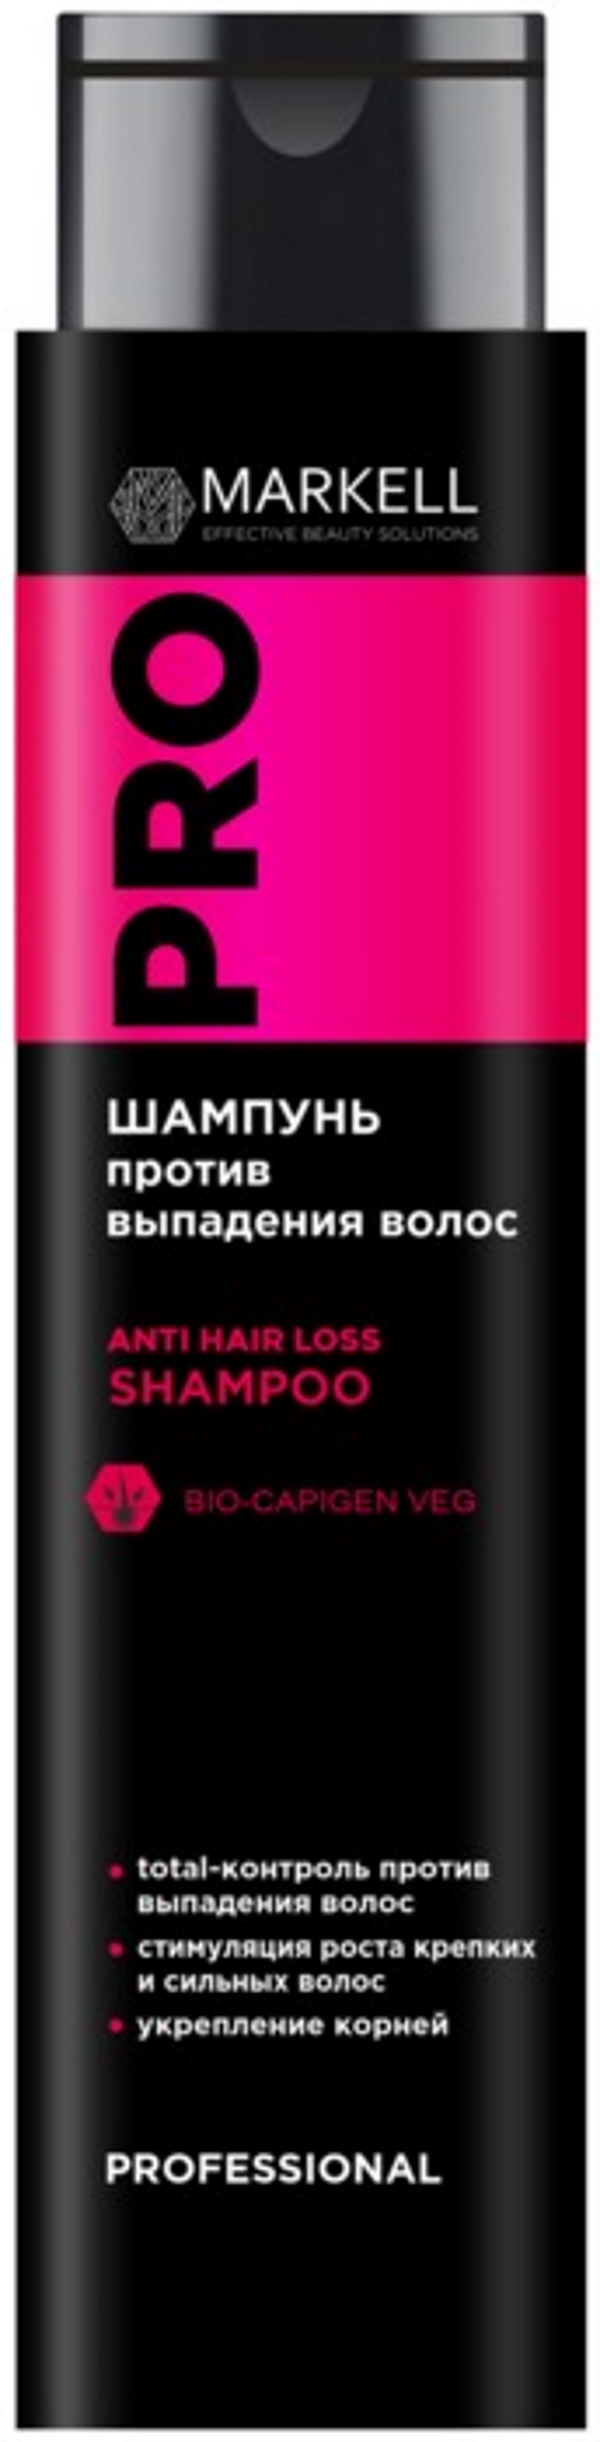 Шампунь против выпадения волос MARKELL PROFESSIONAL ANTI HAIR LOSS PROGRAM 400 мл